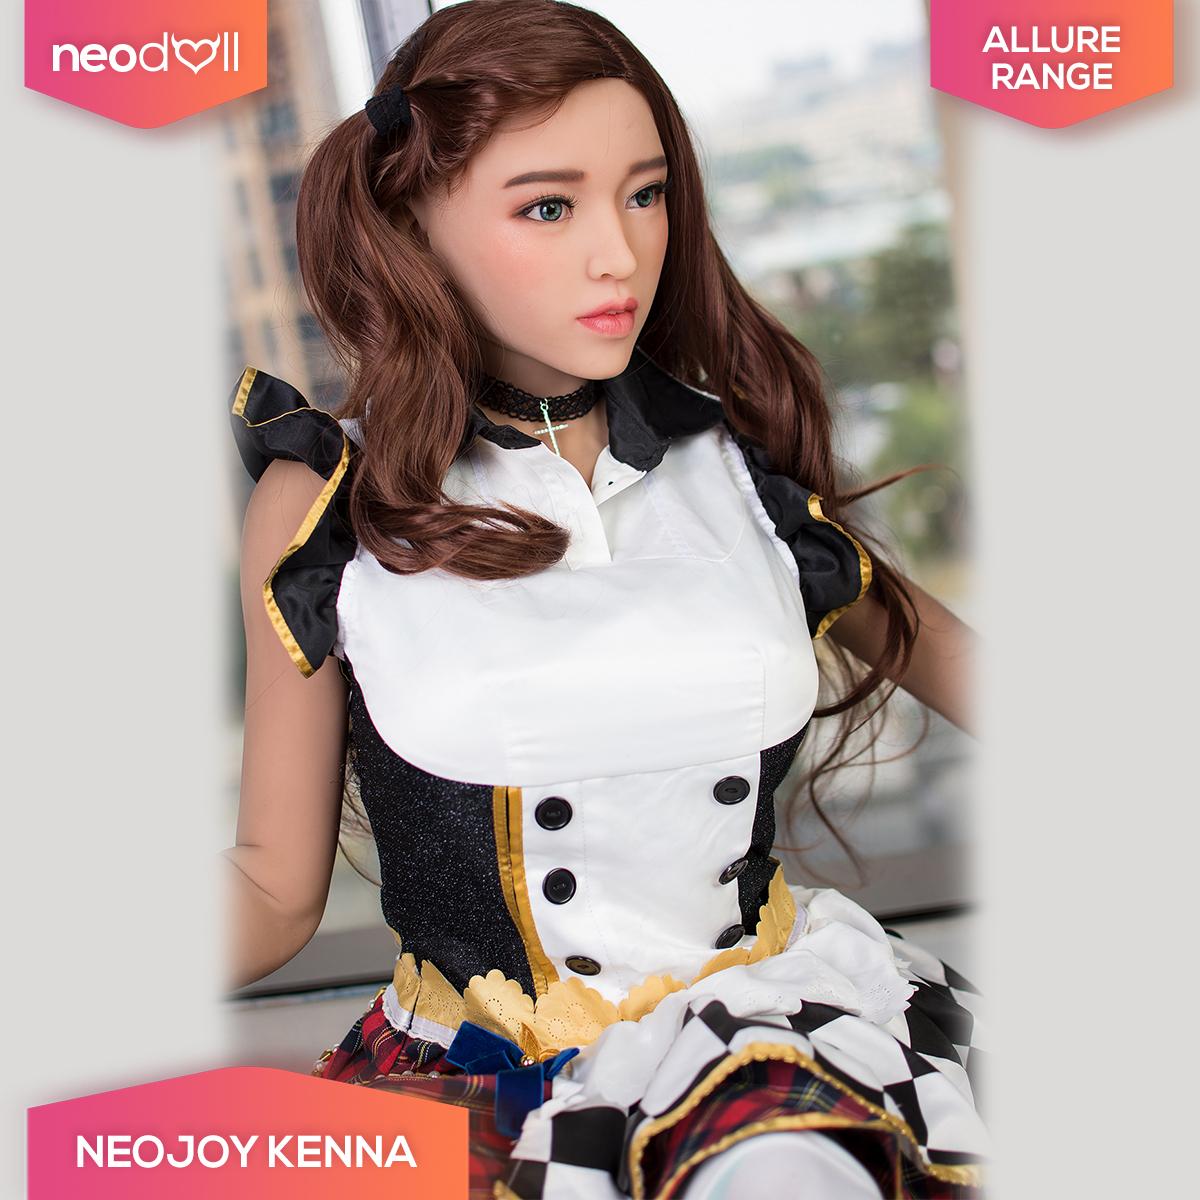 Neodoll Allure Kenna - Realistic Sex Doll - 165cm - Tan